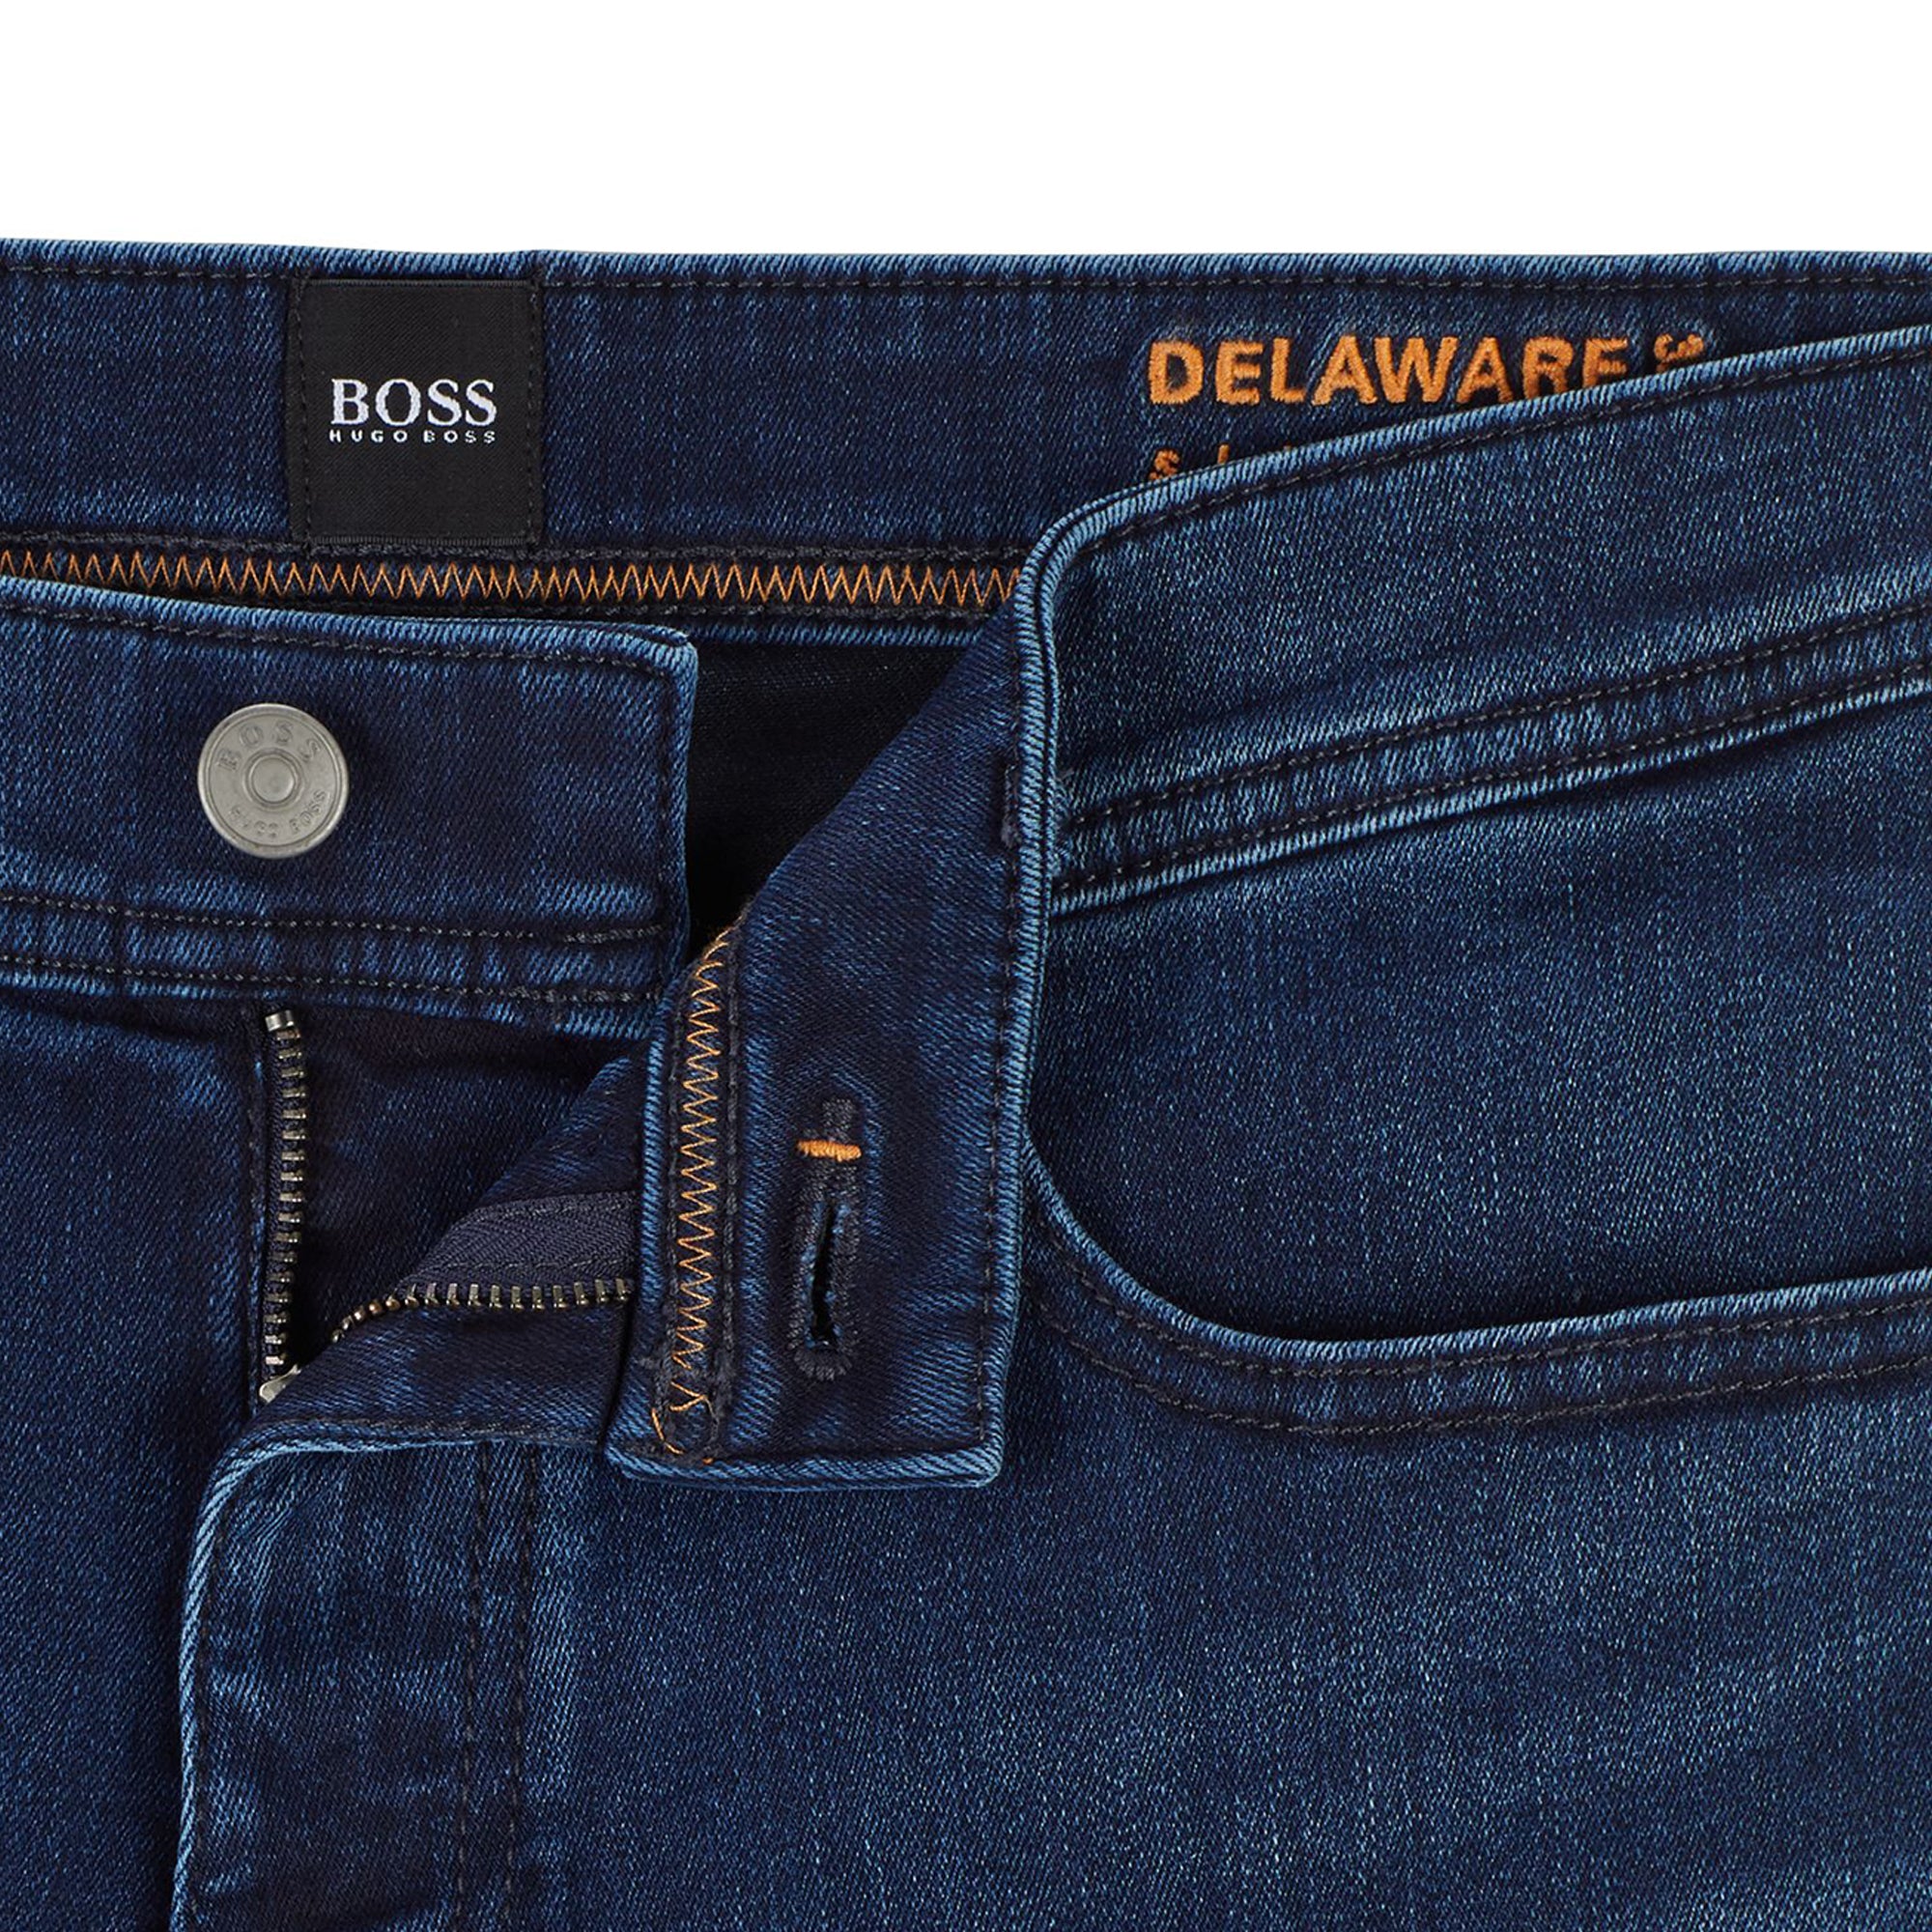 Boss Delaware Slim Fit Jeans - House Dark Blue